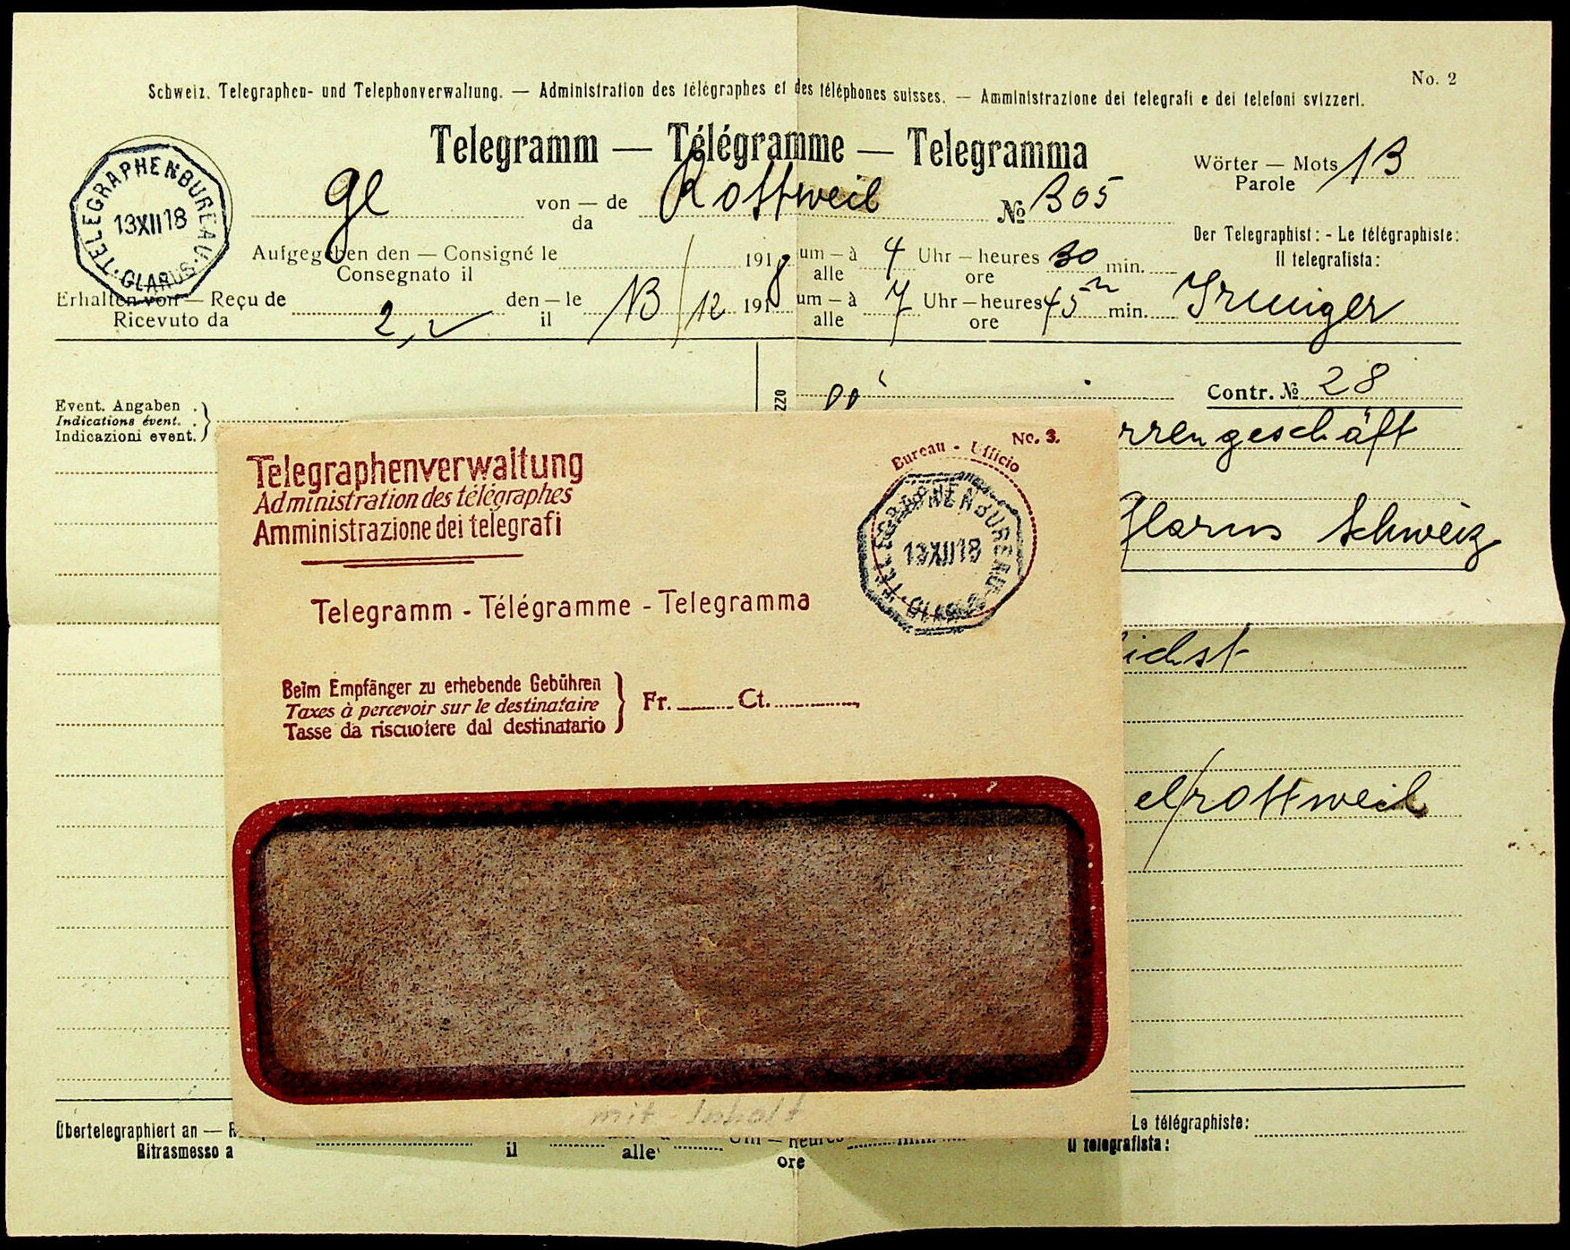 1918 telegram and envelope